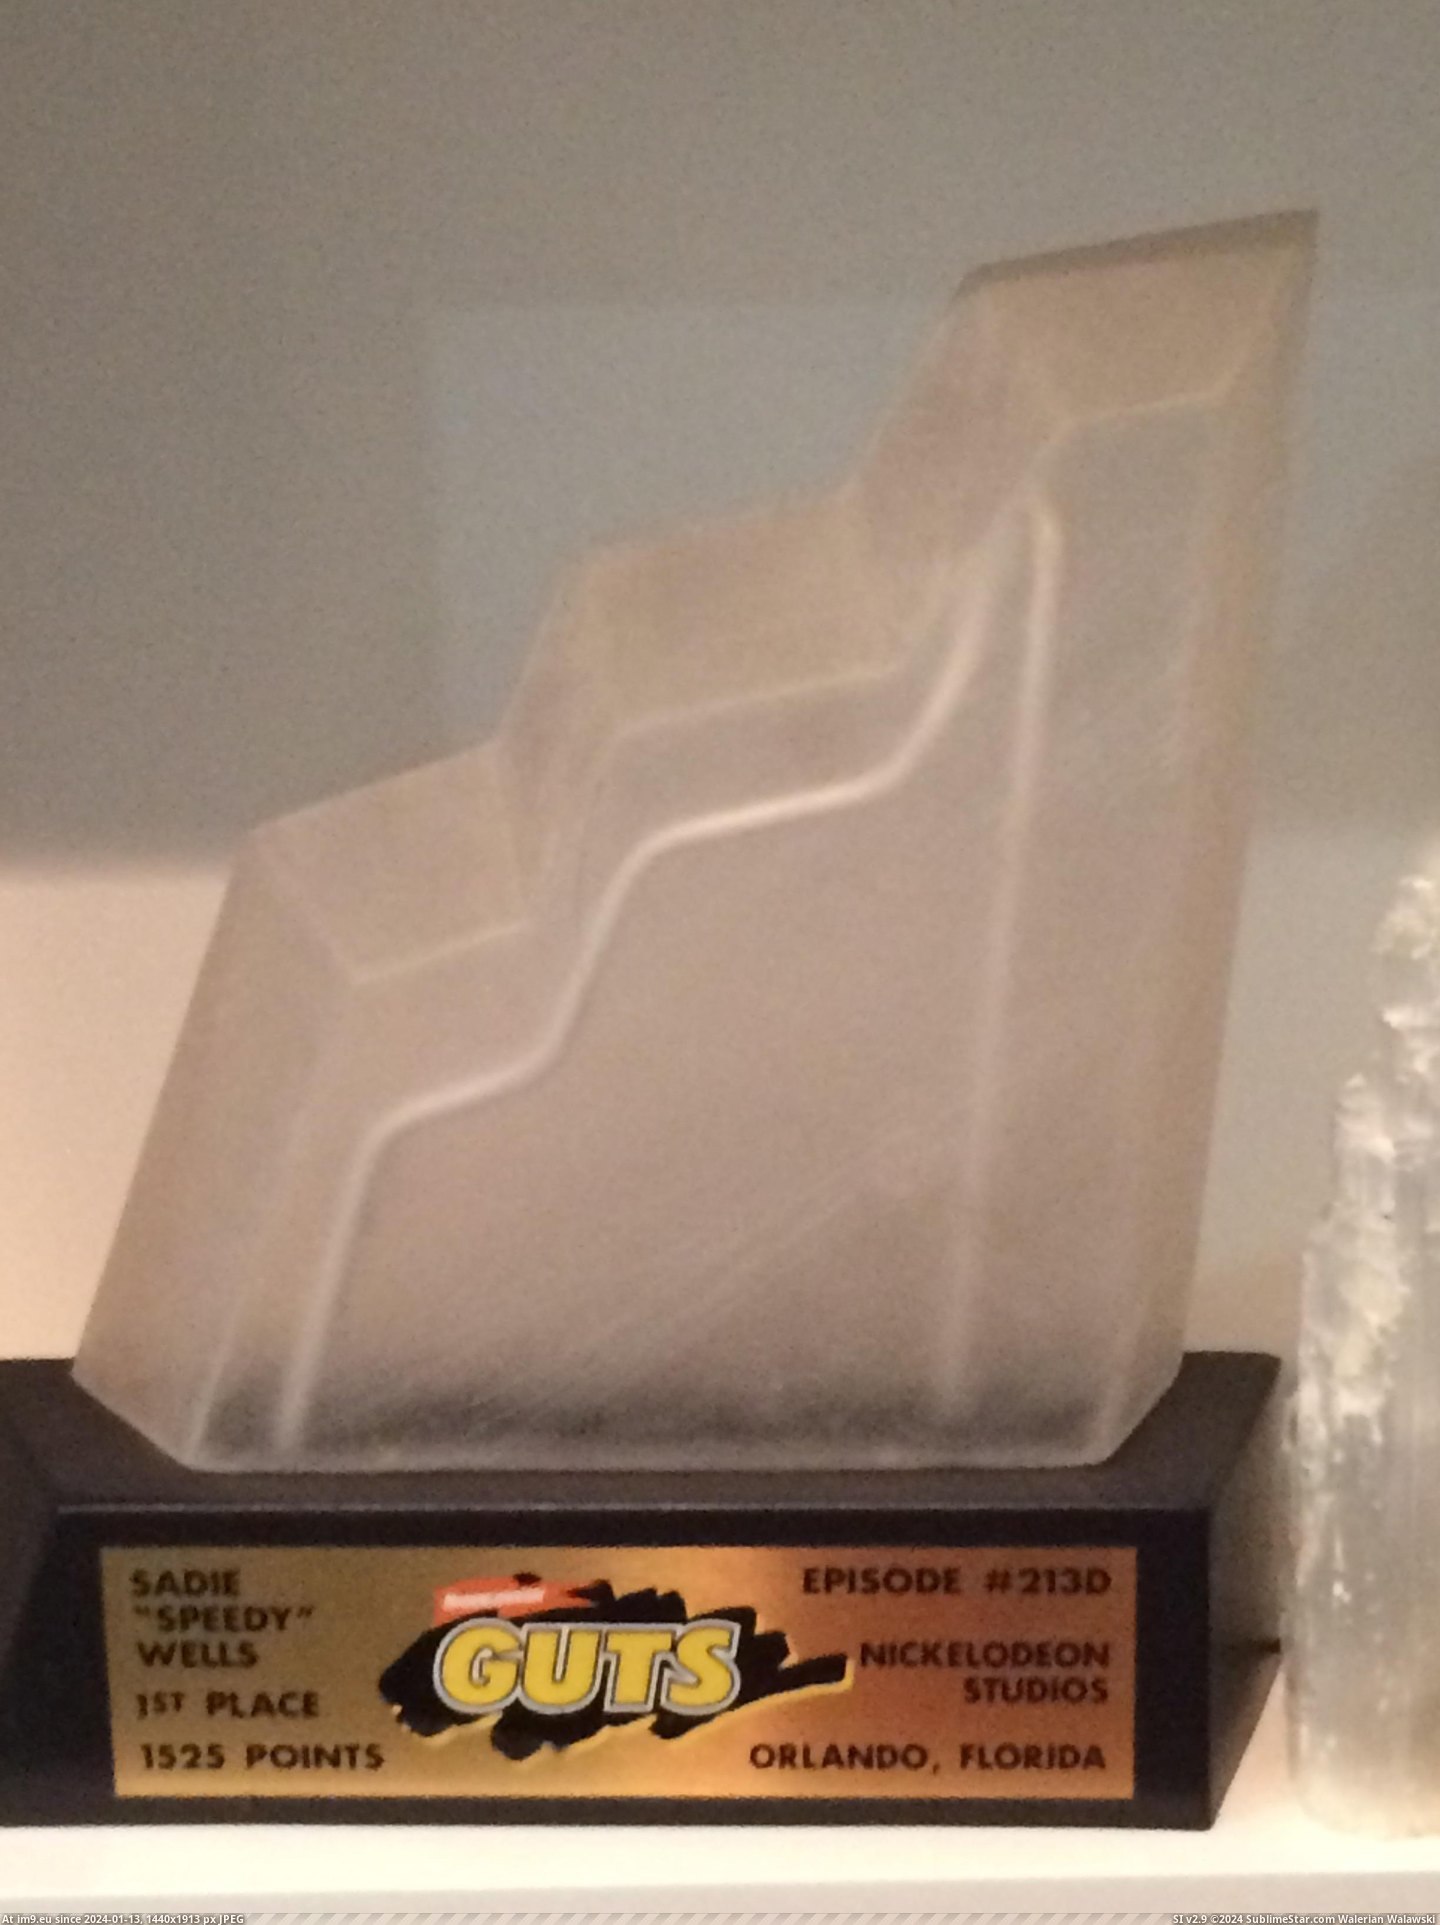 #Good #Husband #Doctor #Display #Award #Office #Hands [Pics] My husband just sent me this award on display at his doctor's office. I think he's in good hands. Pic. (Изображение из альбом My r/PICS favs))